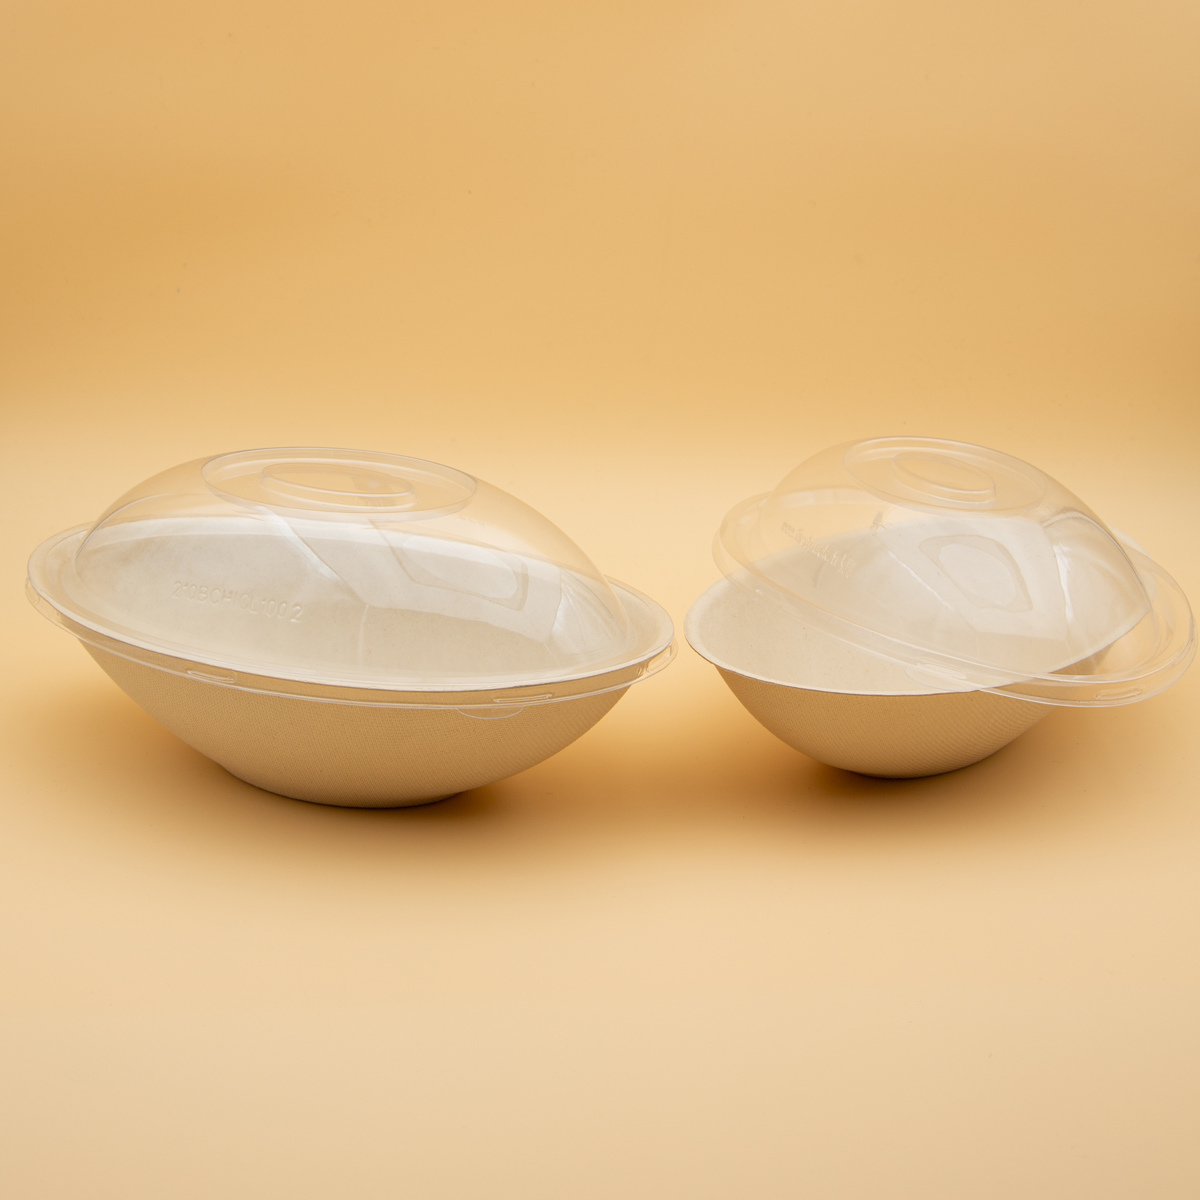 125 pz Vaschetta biodegradabile ovale da € 0,31 Cad + Iva